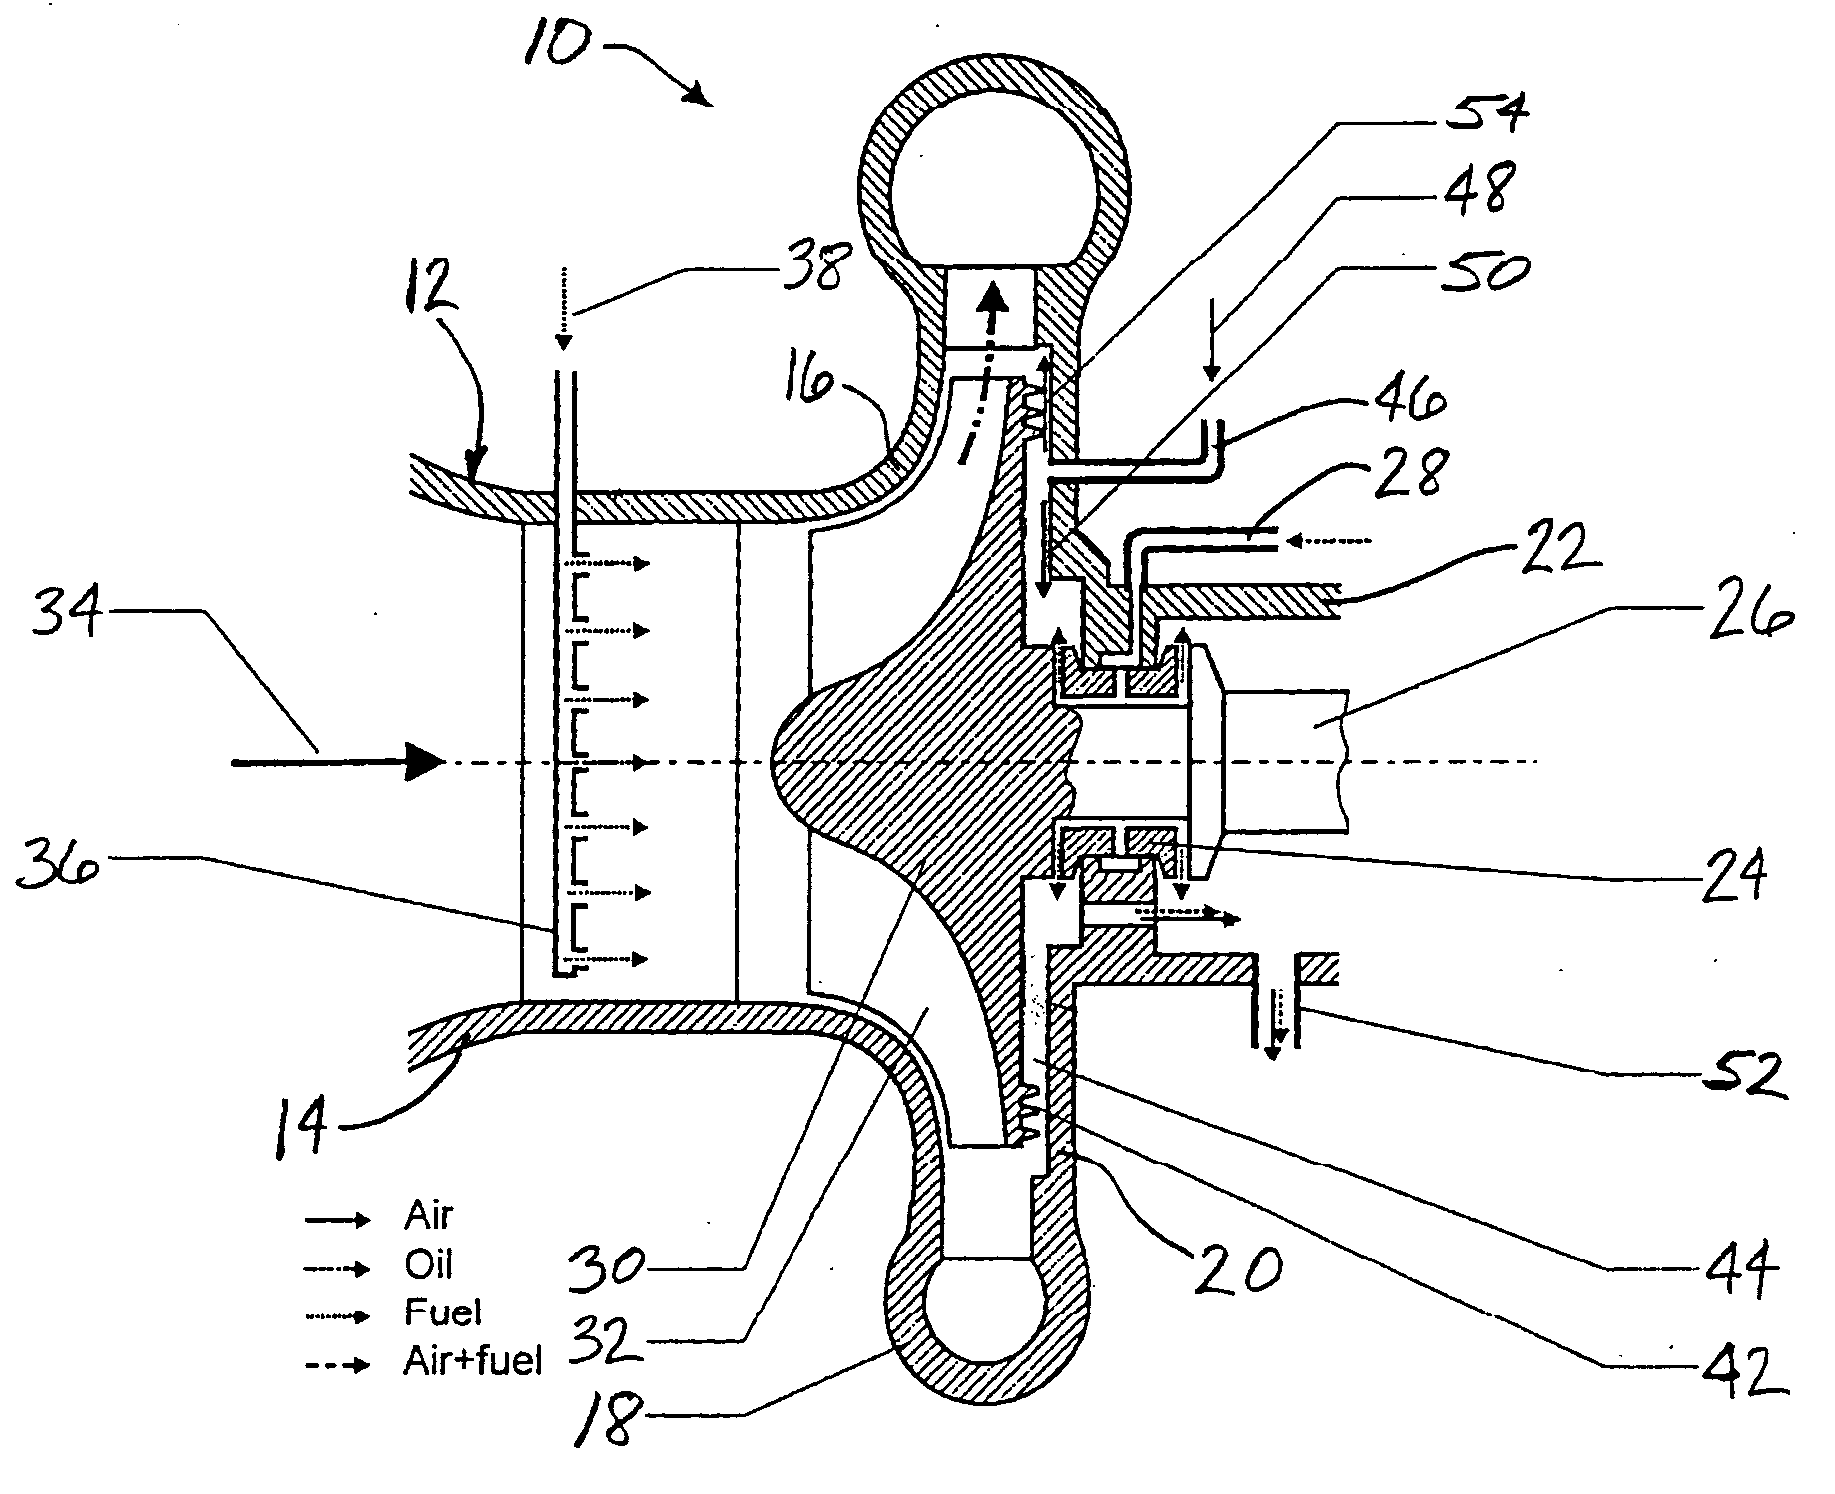 Sealing arrangement in a compressor